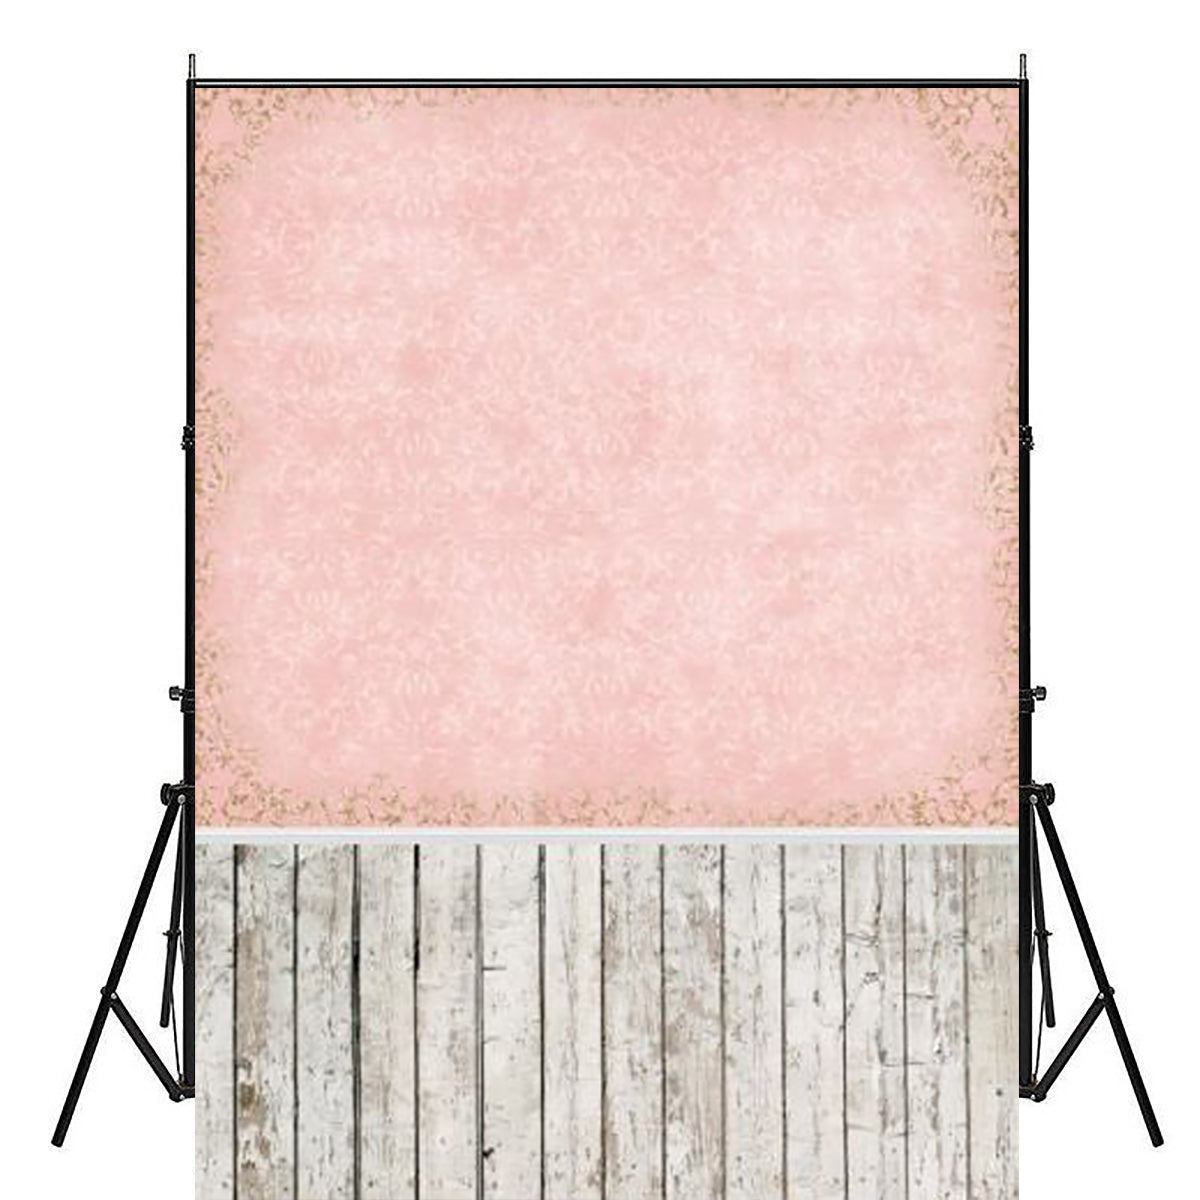 3x5FT 5x7FT Pink Theme Wood Floor Photography Backdrop Background Studio Prop